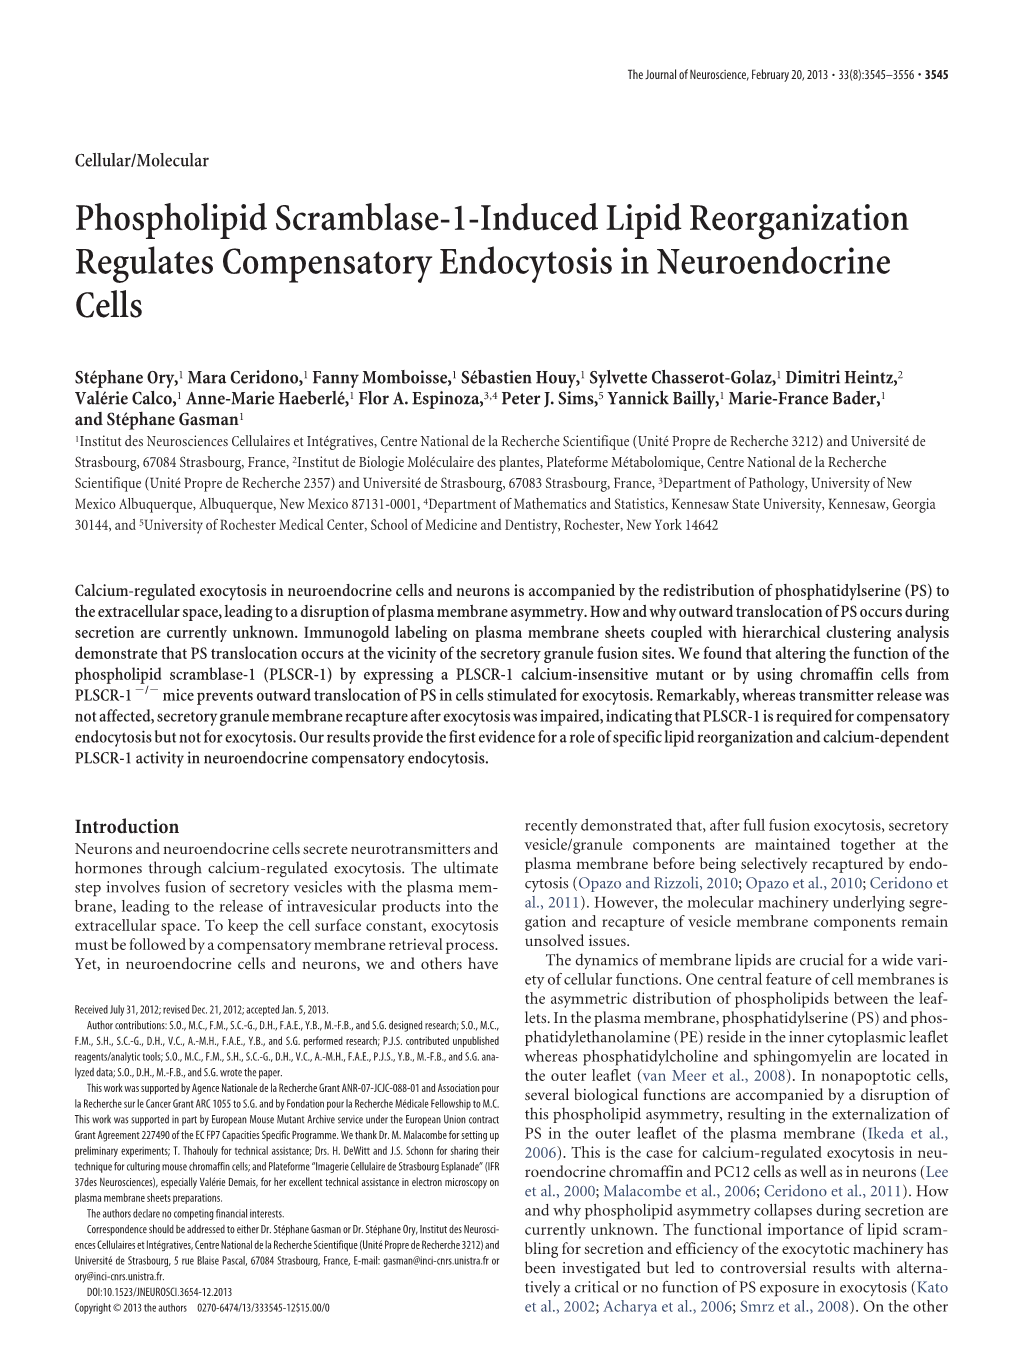 Phospholipid Scramblase-1-Induced Lipid Reorganization Regulates Compensatory Endocytosis in Neuroendocrine Cells